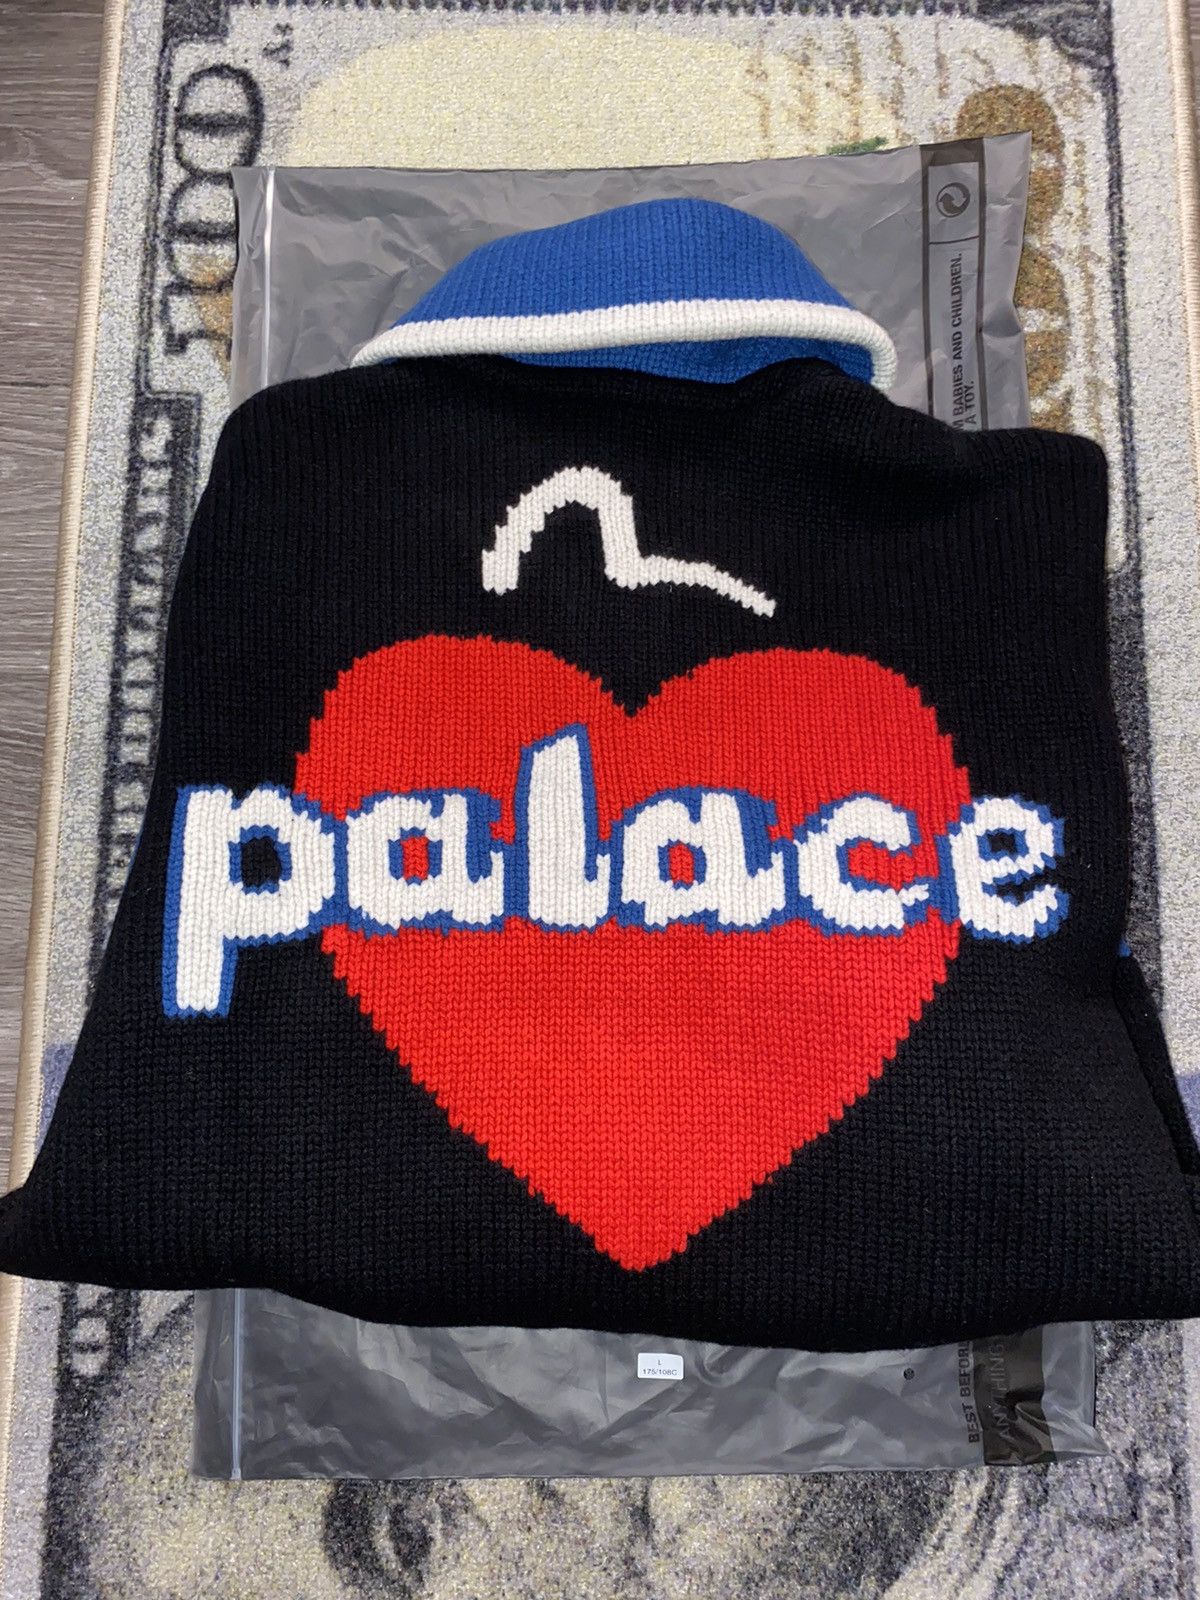 Palace Palace x Evisu Cowichan Knit Black | Grailed